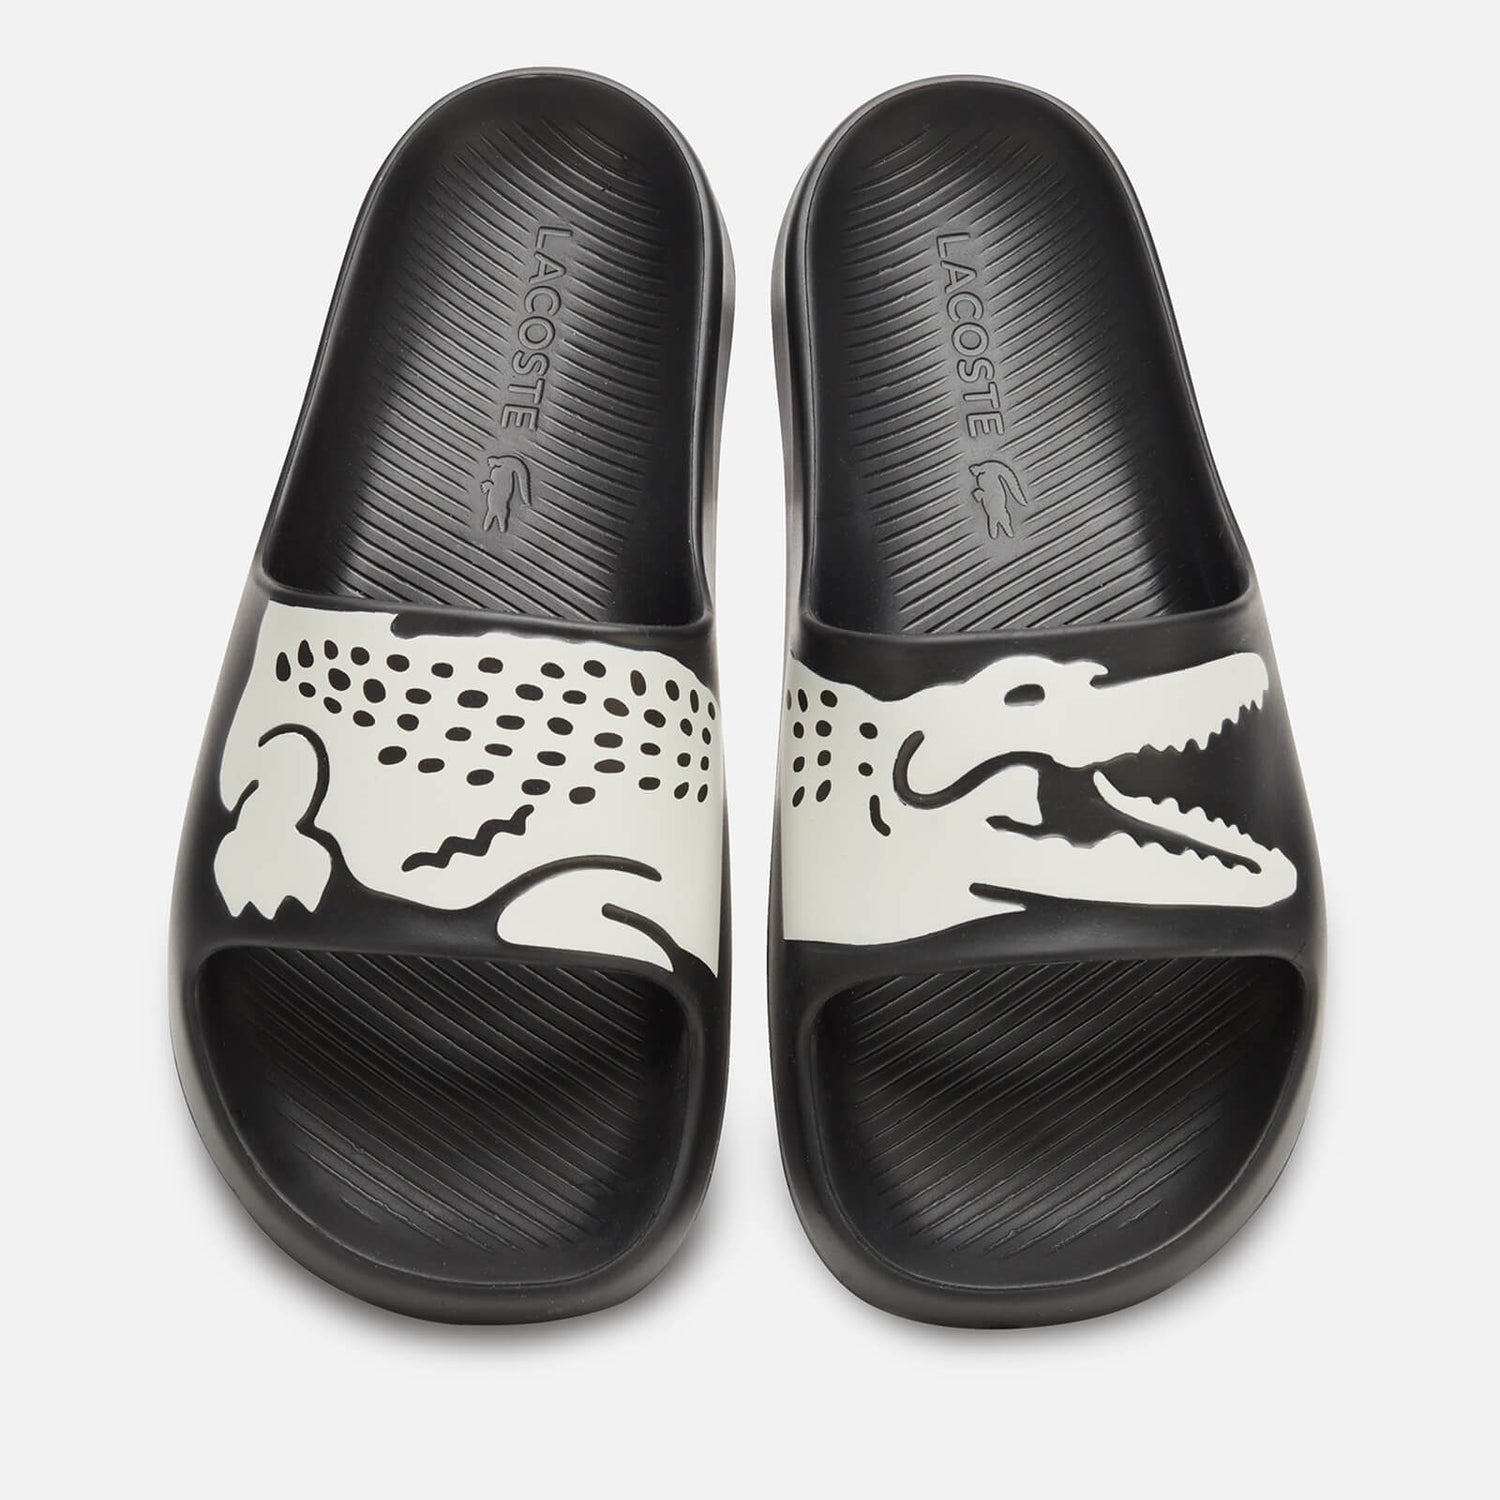 Lacoste Women's Croco 2.0 0721 1 Slide Sandals - Black/White - UK 3